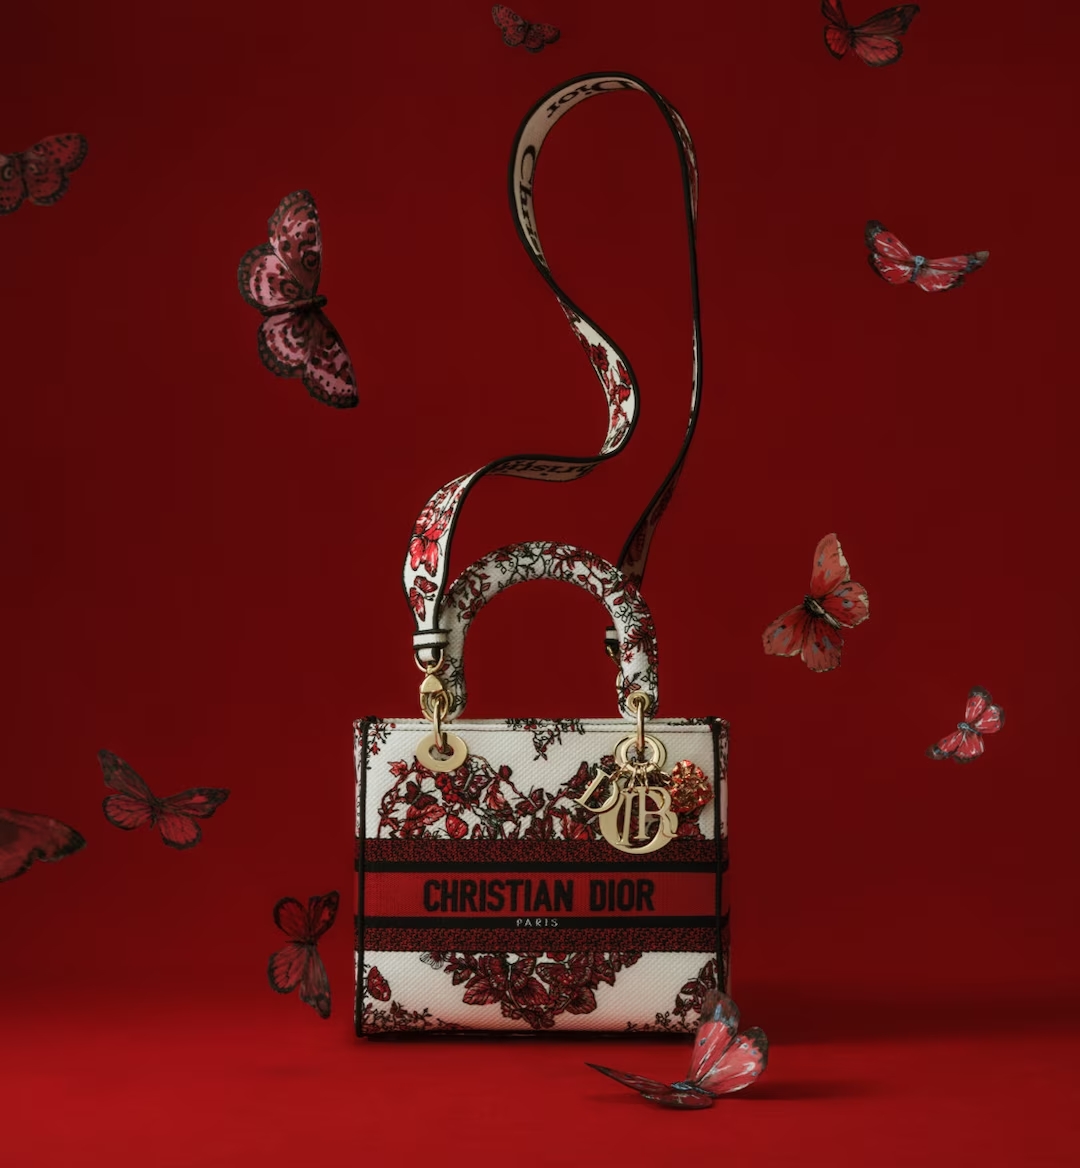 Dior celebrate Love: Romantična „Le Cœur des Papillons” kolekcija kao uvertira u mesec ljubavi